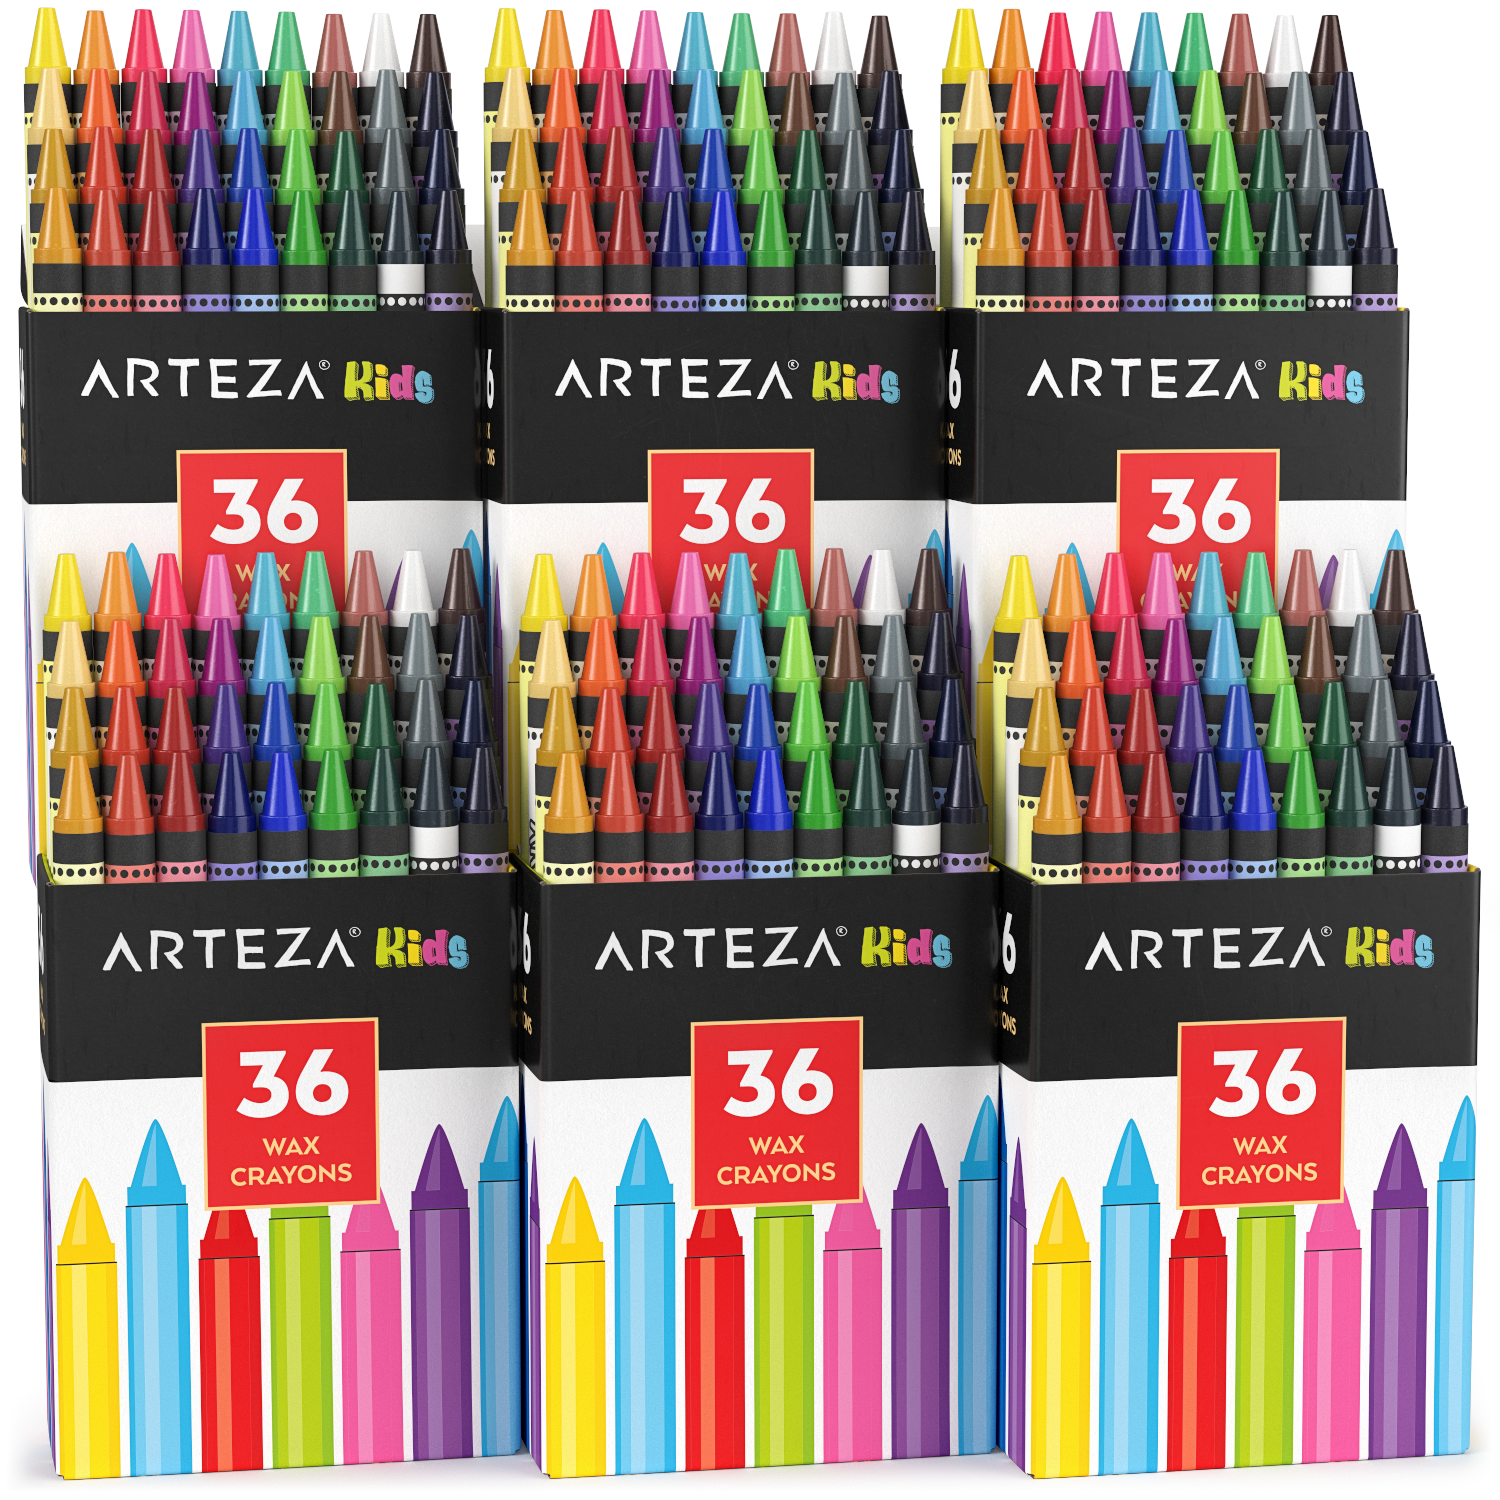 Crayola Crayons School Art Supplies Bulk 6 Pack of 24 Count